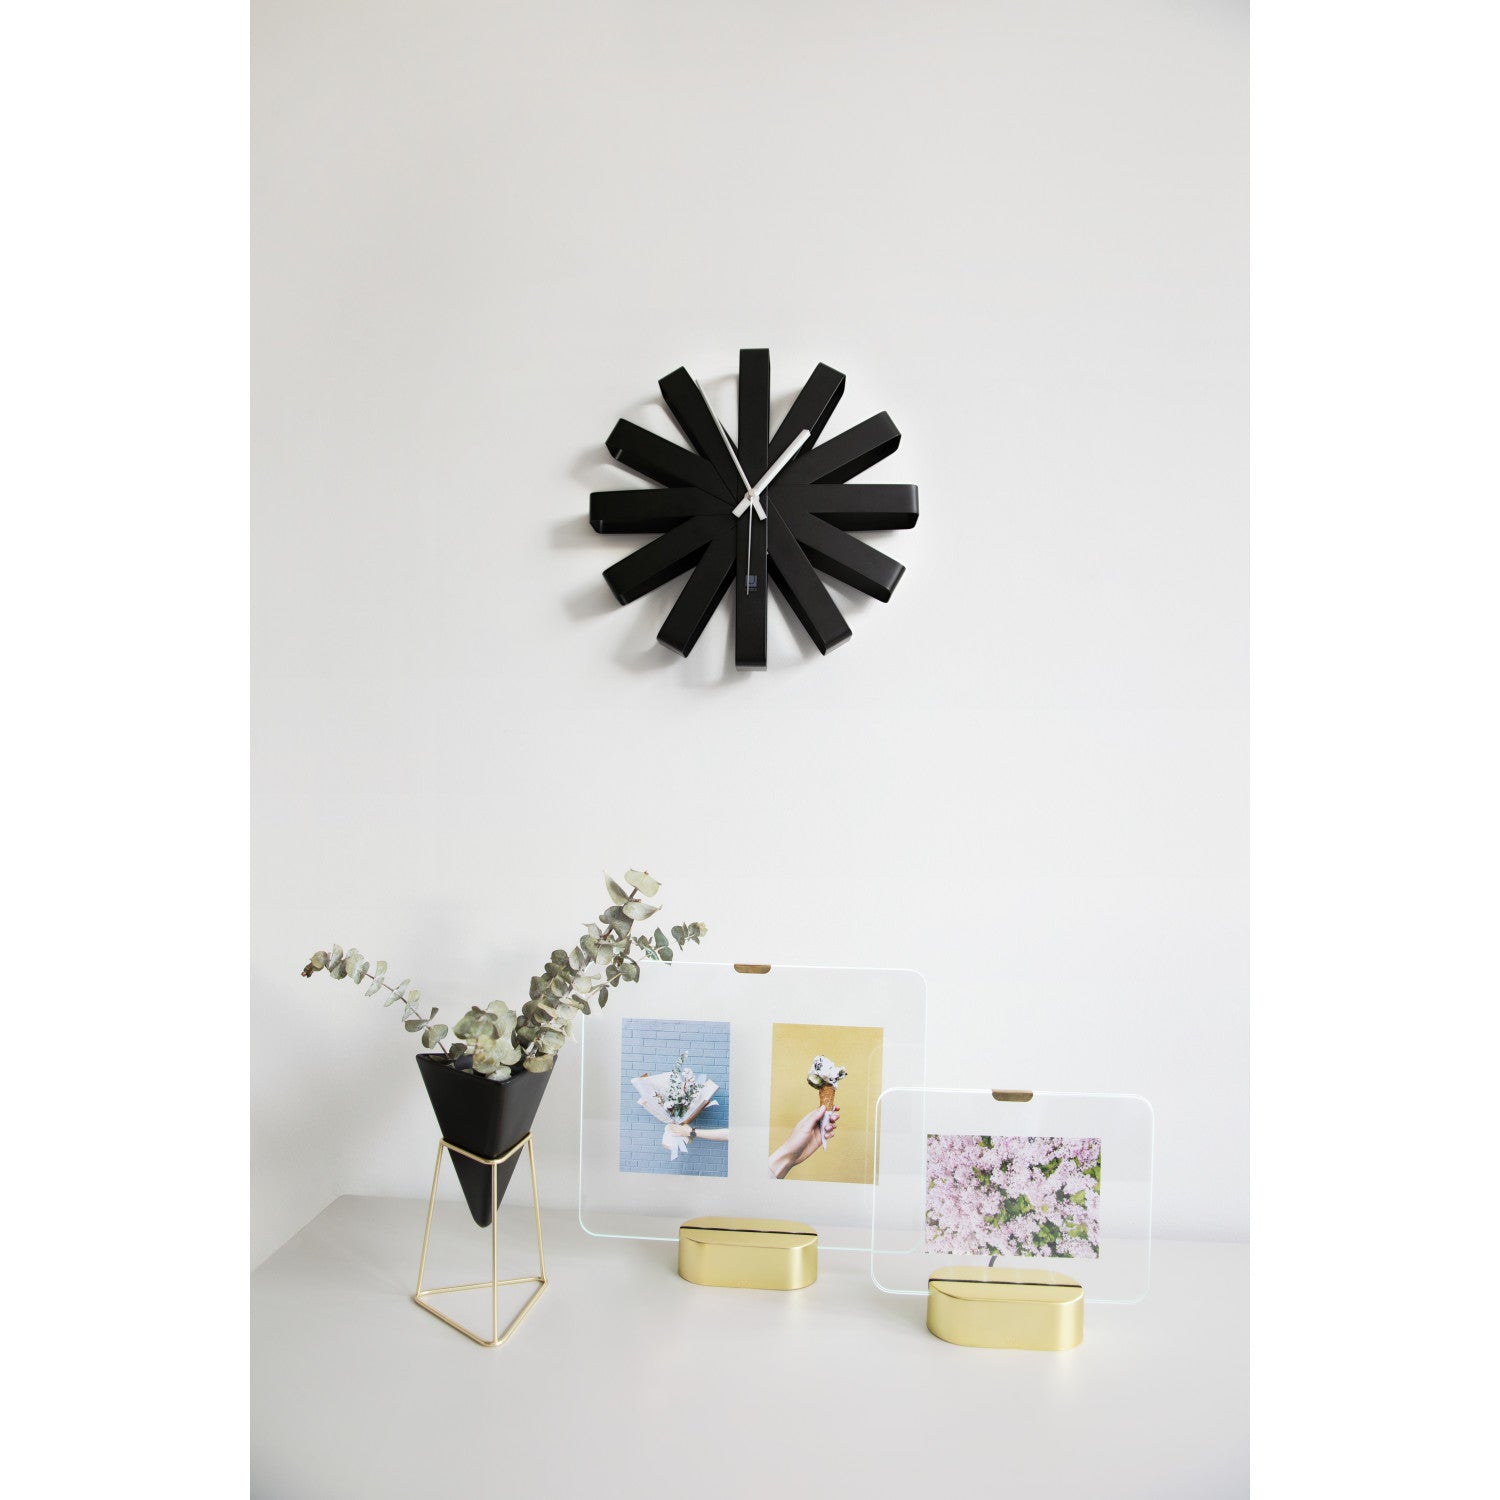 Umbra Ribbon Wall Clock - Black